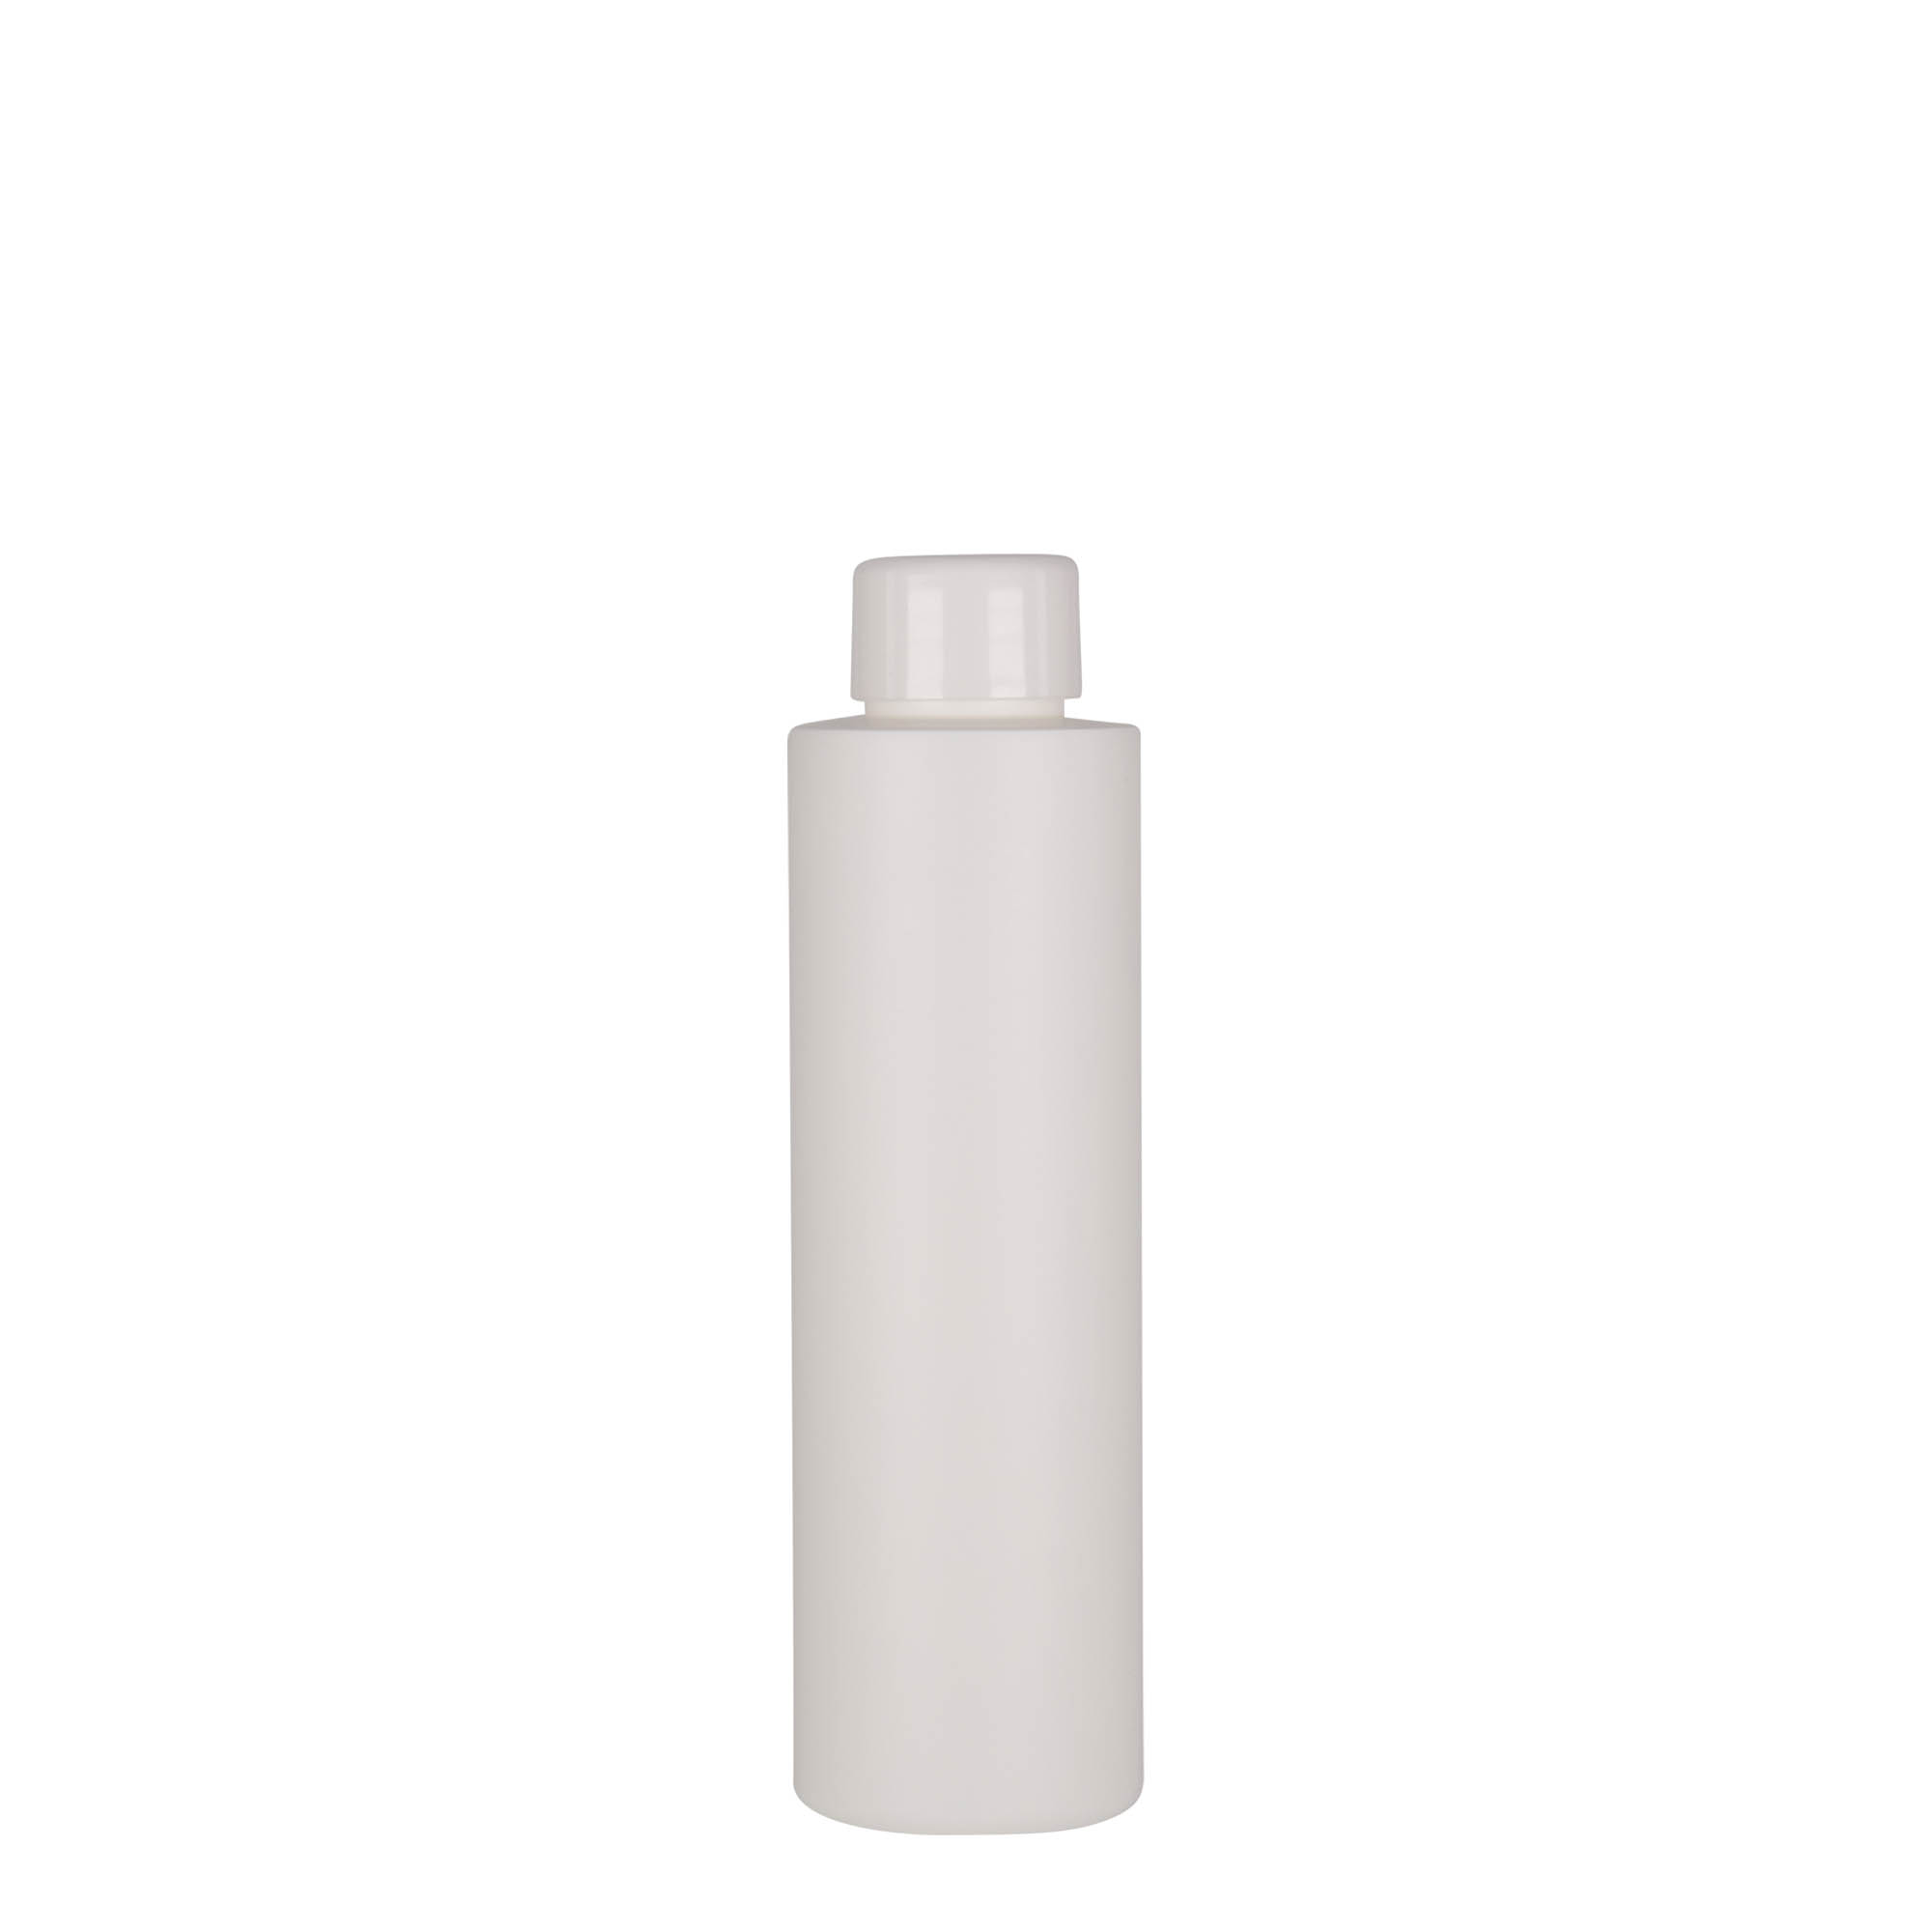 150 ml plastic bottle 'Pipe', HDPE, white, closure: GPI 24/410